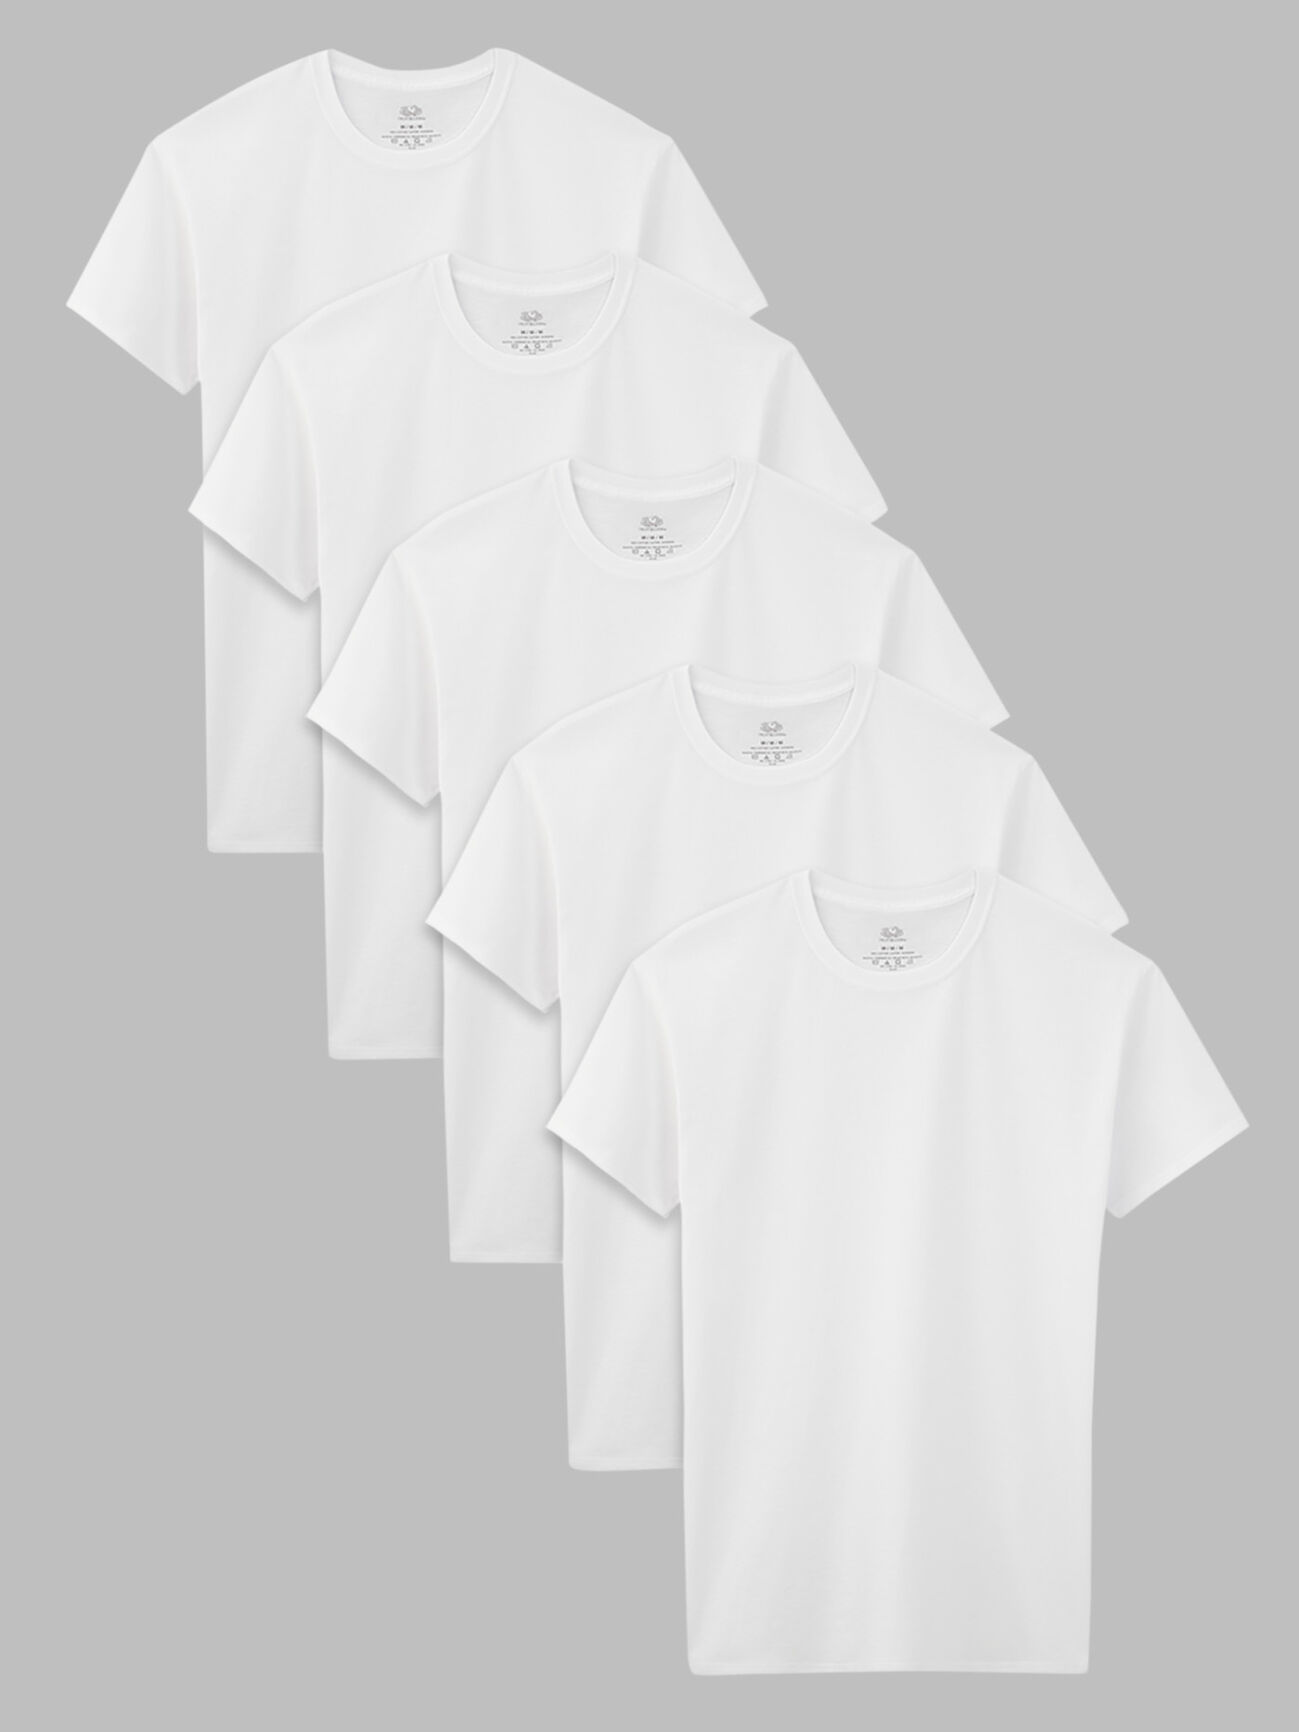 Boys' White Crew Neck T-Shirts, 5 Pack